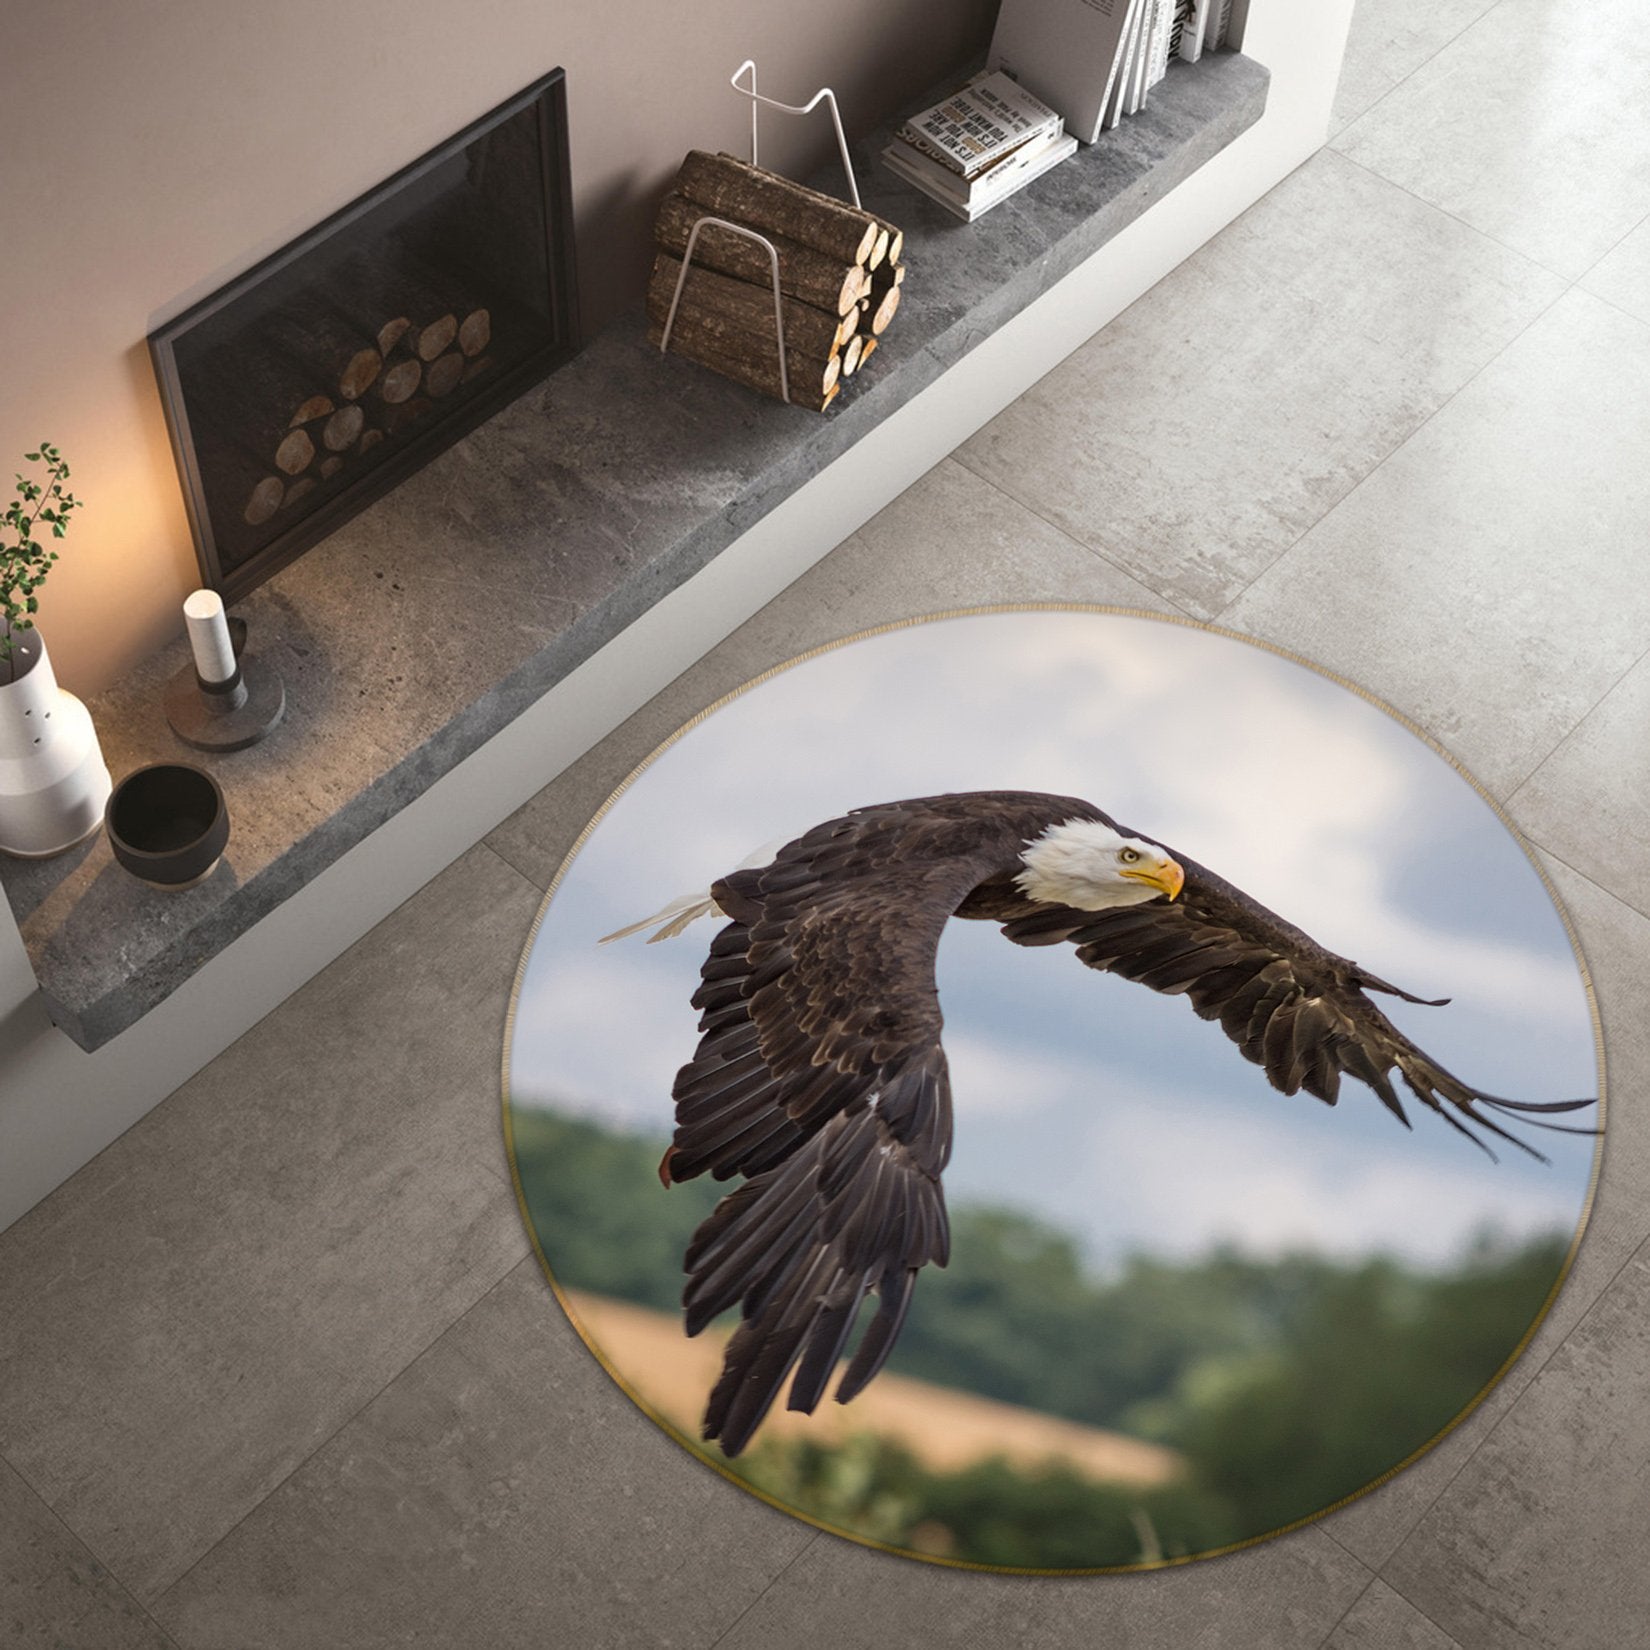 3D Eagle Flying 010 Animal Round Non Slip Rug Mat Mat AJ Creativity Home 